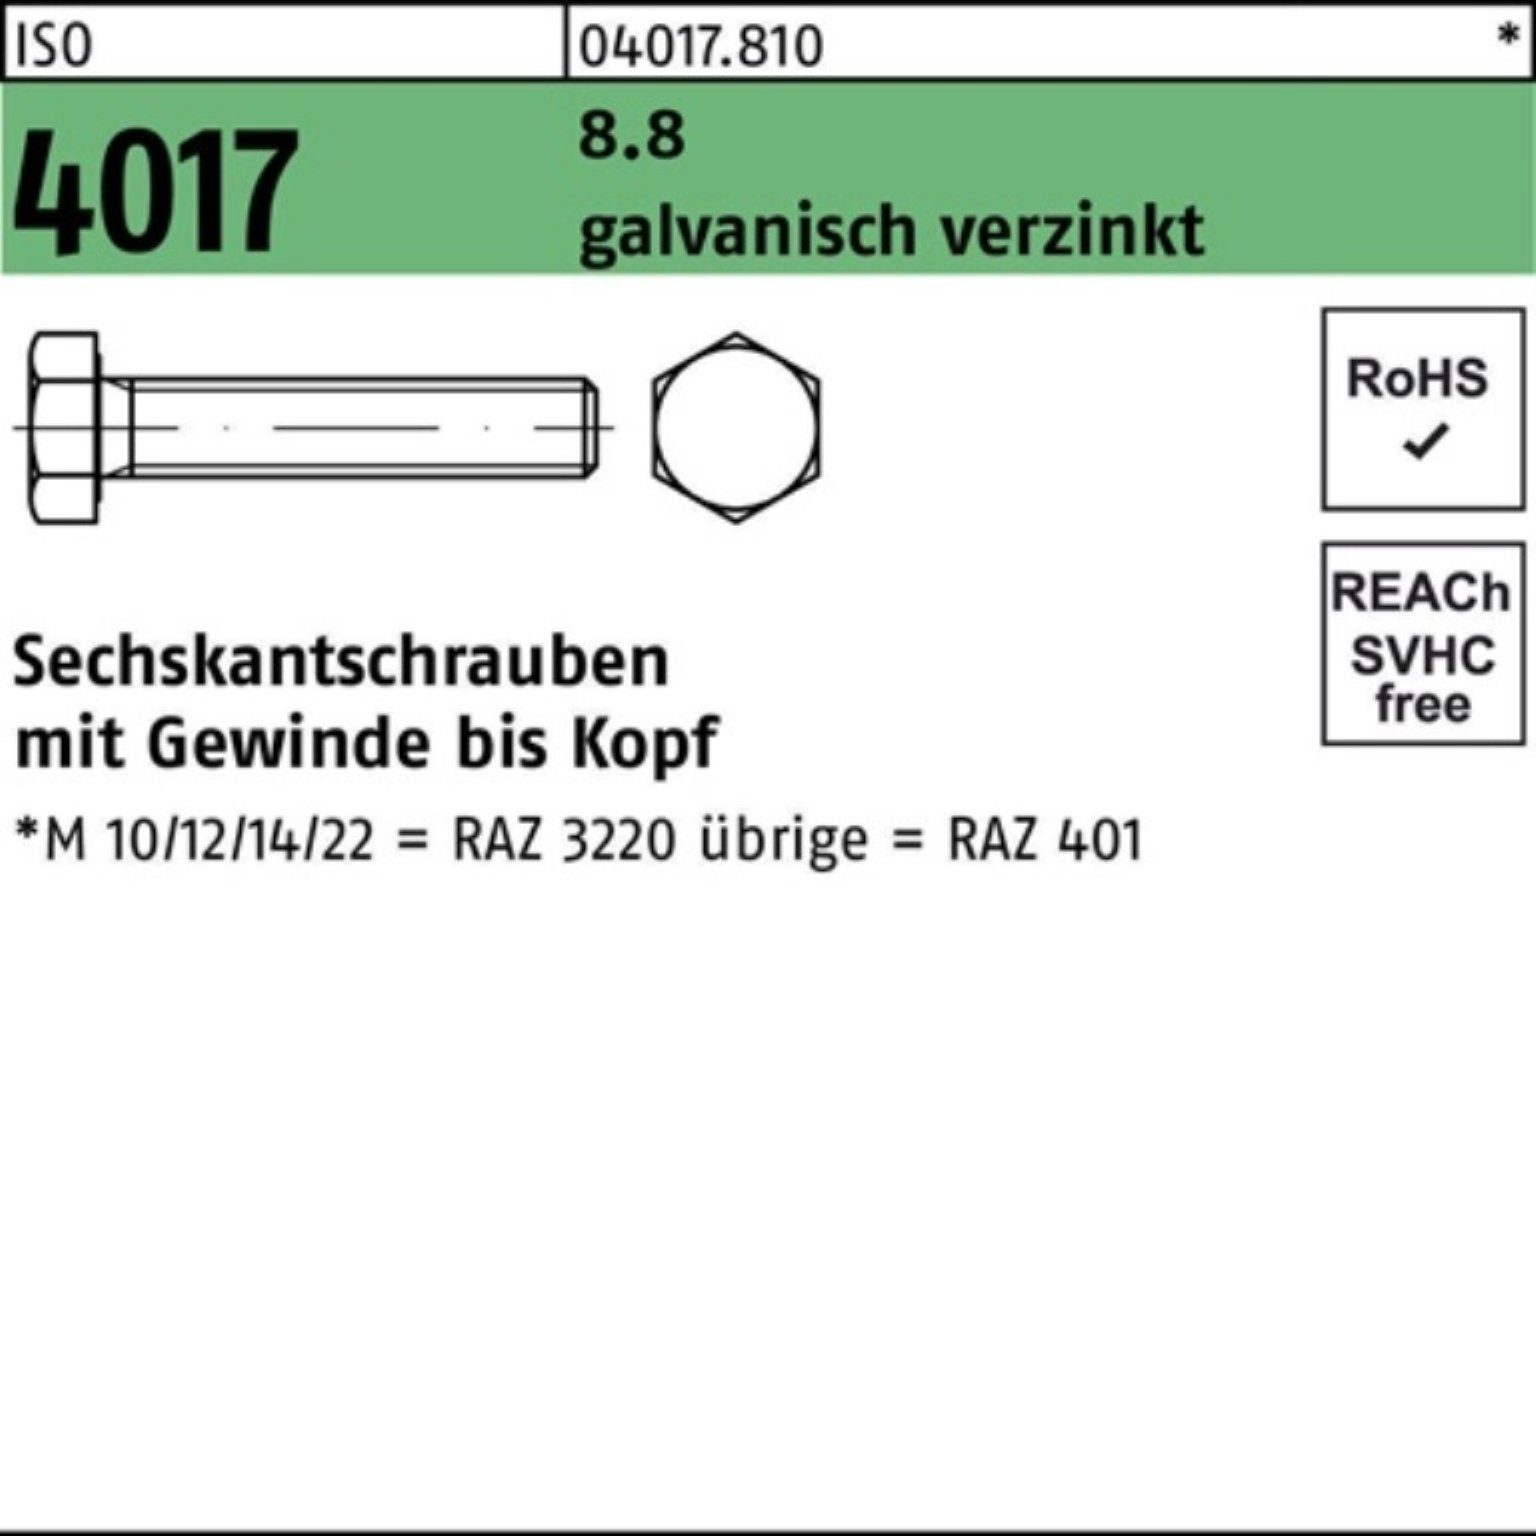 Bufab Sechskantschraube 100er Pack Sechskantschraube 8.8 1 galv.verz. M30x Stü 40 ISO VG 4017